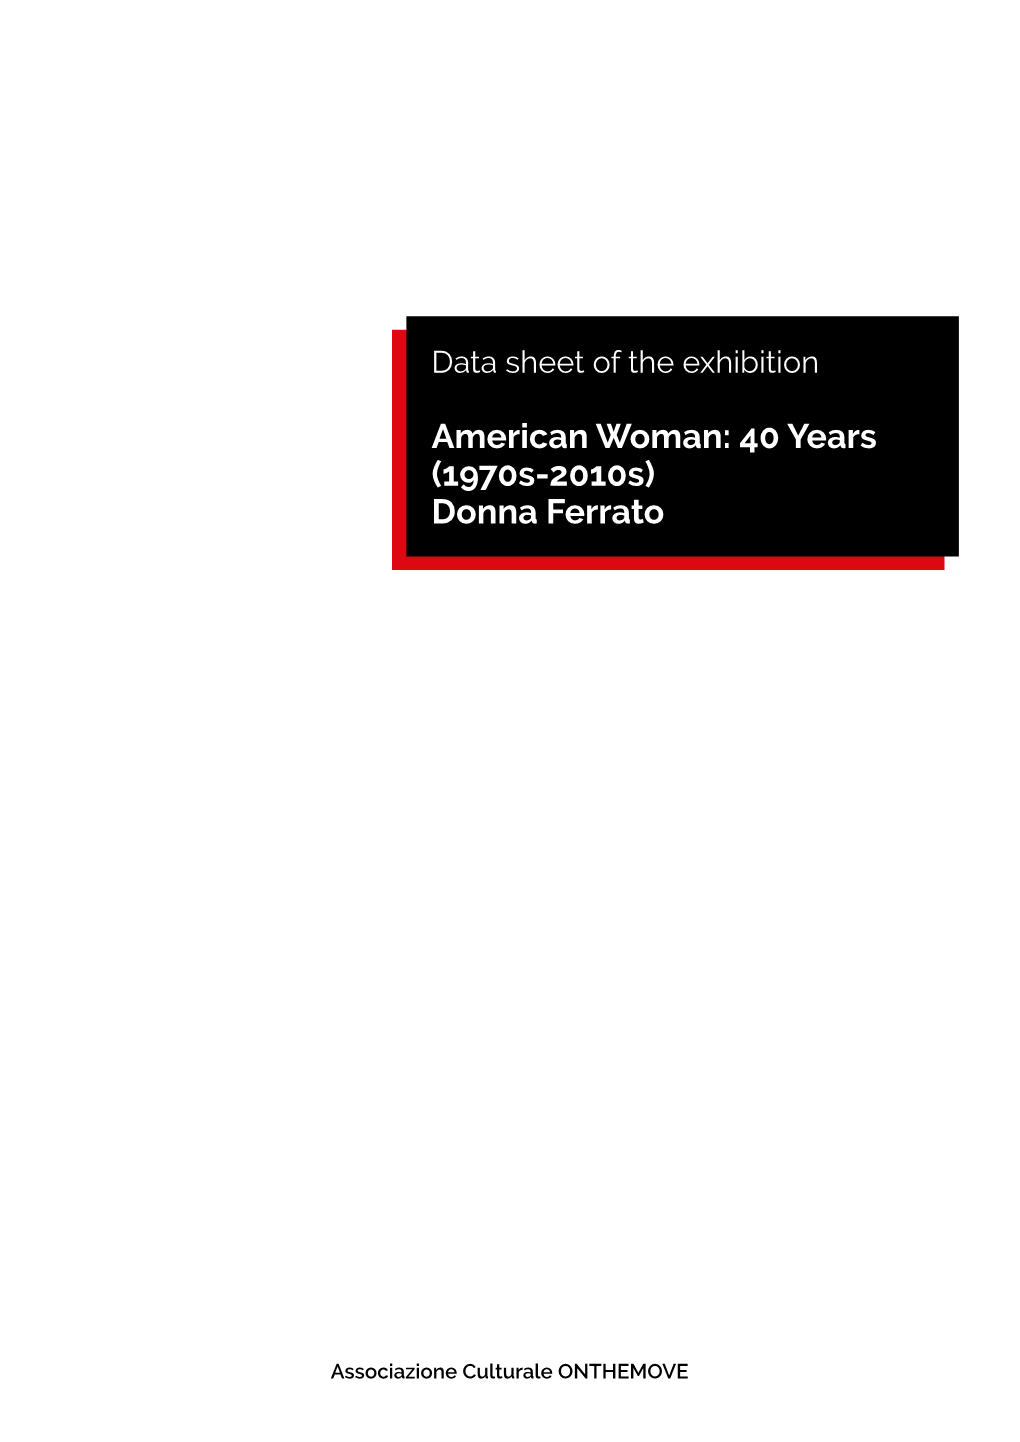 American Woman: 40 Years (1970S-2010S) Donna Ferrato